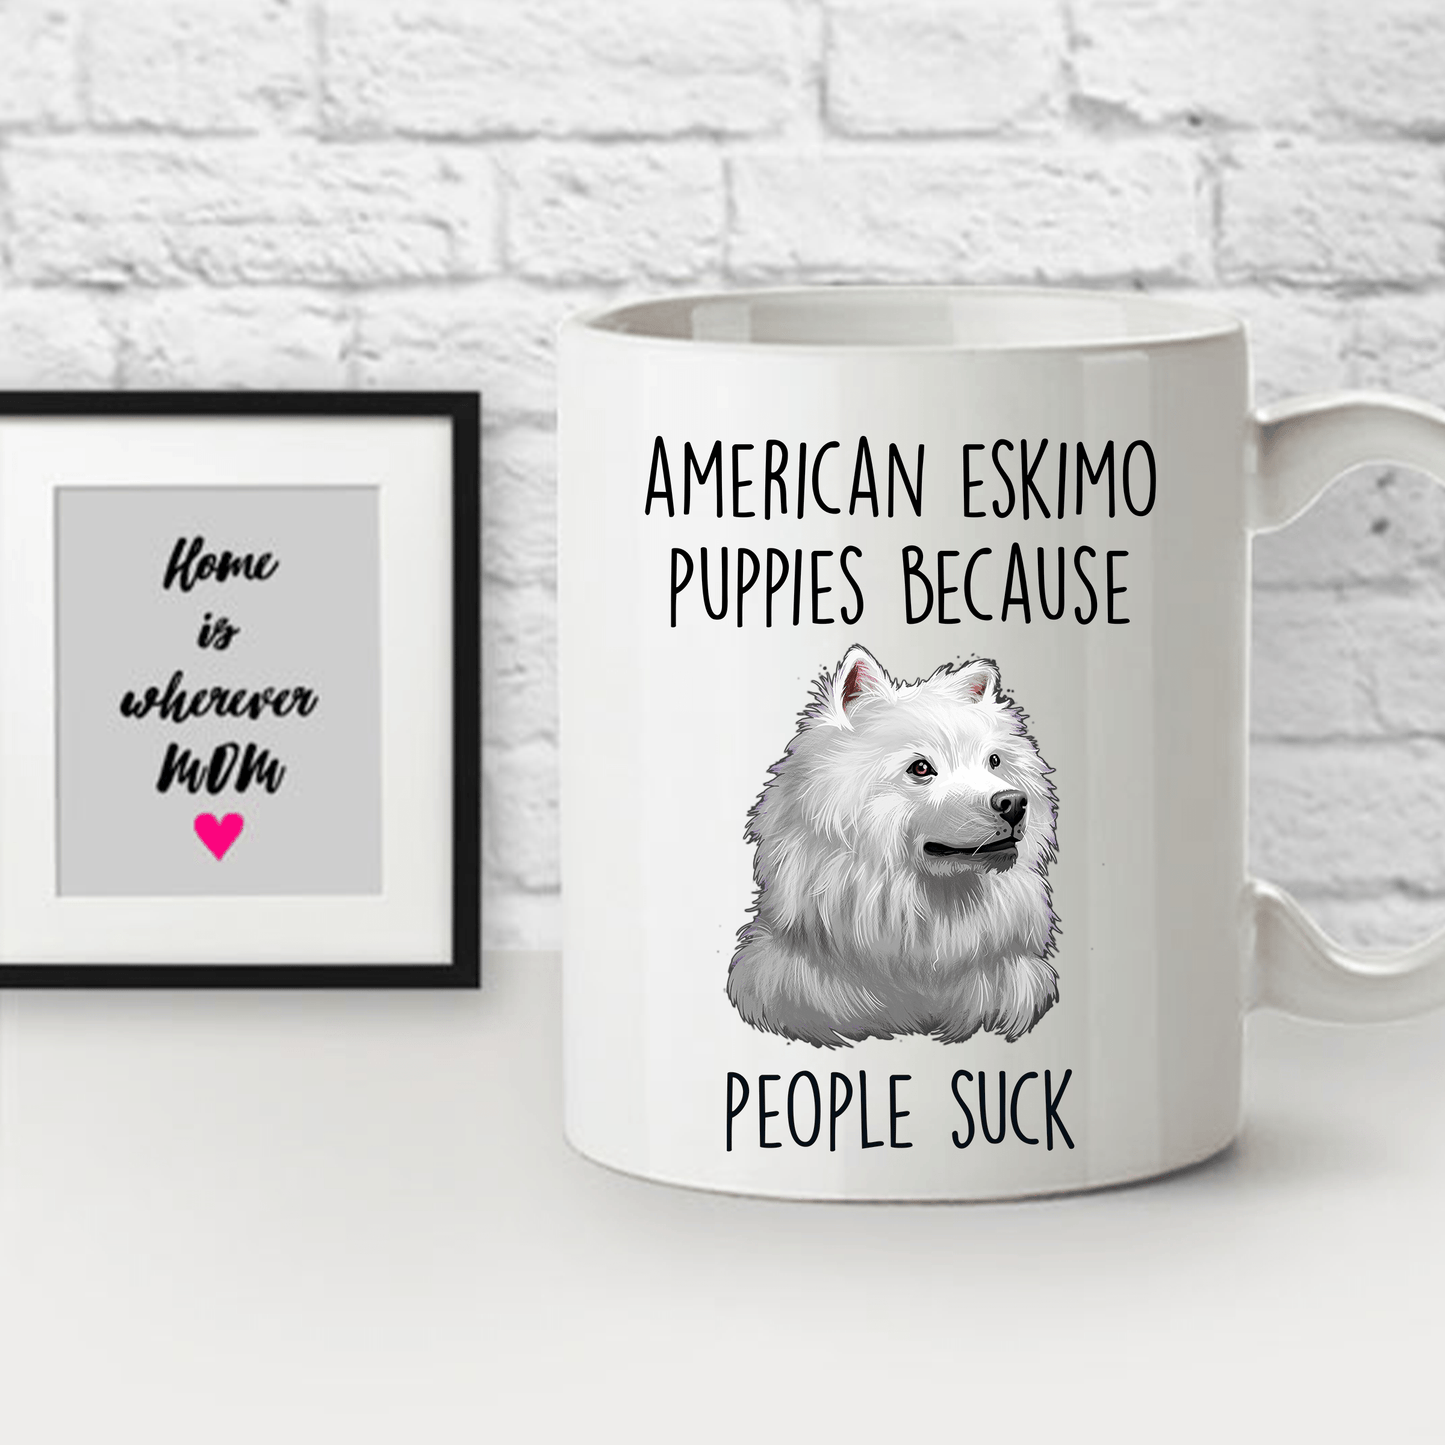 American Eskimo Puppies Because People Suck Funny Ceramic Coffee Mug